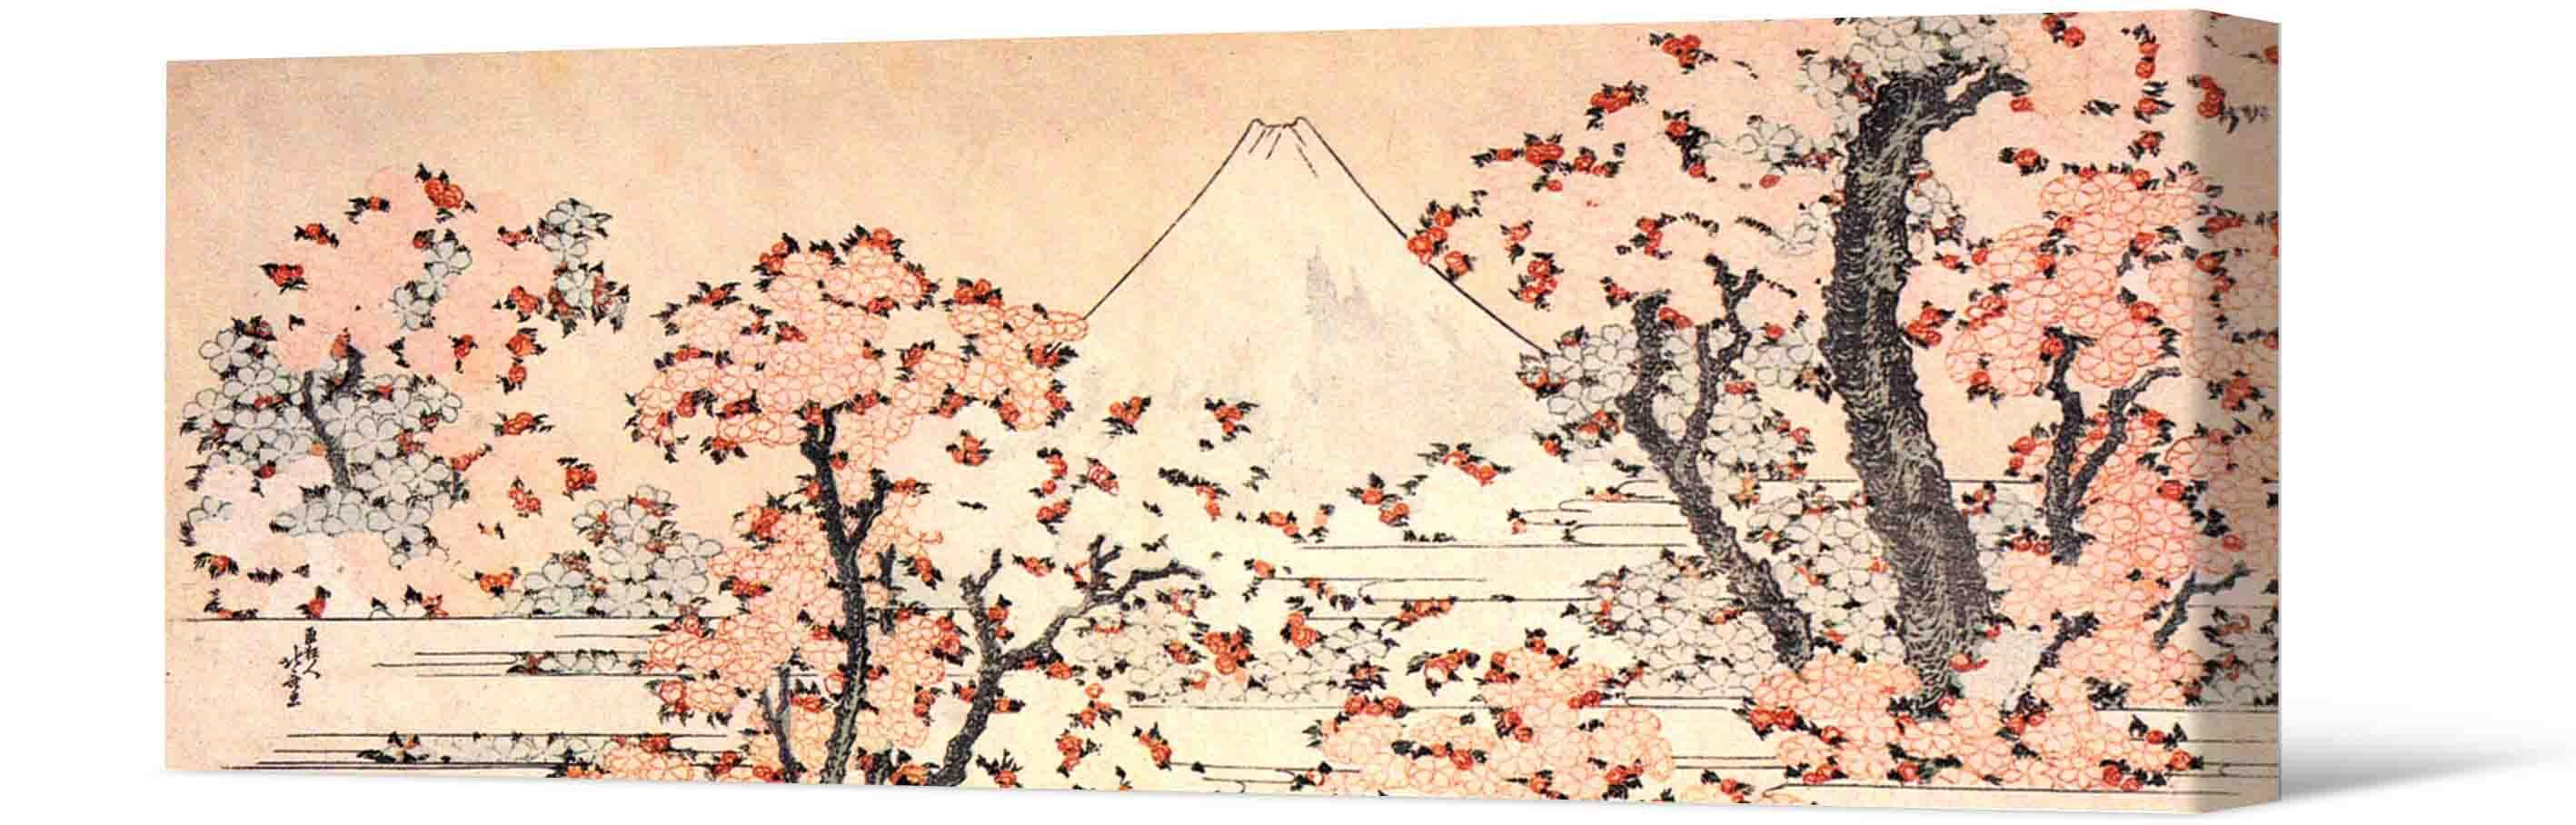 Picture Photo picture - sakura trees and volcano